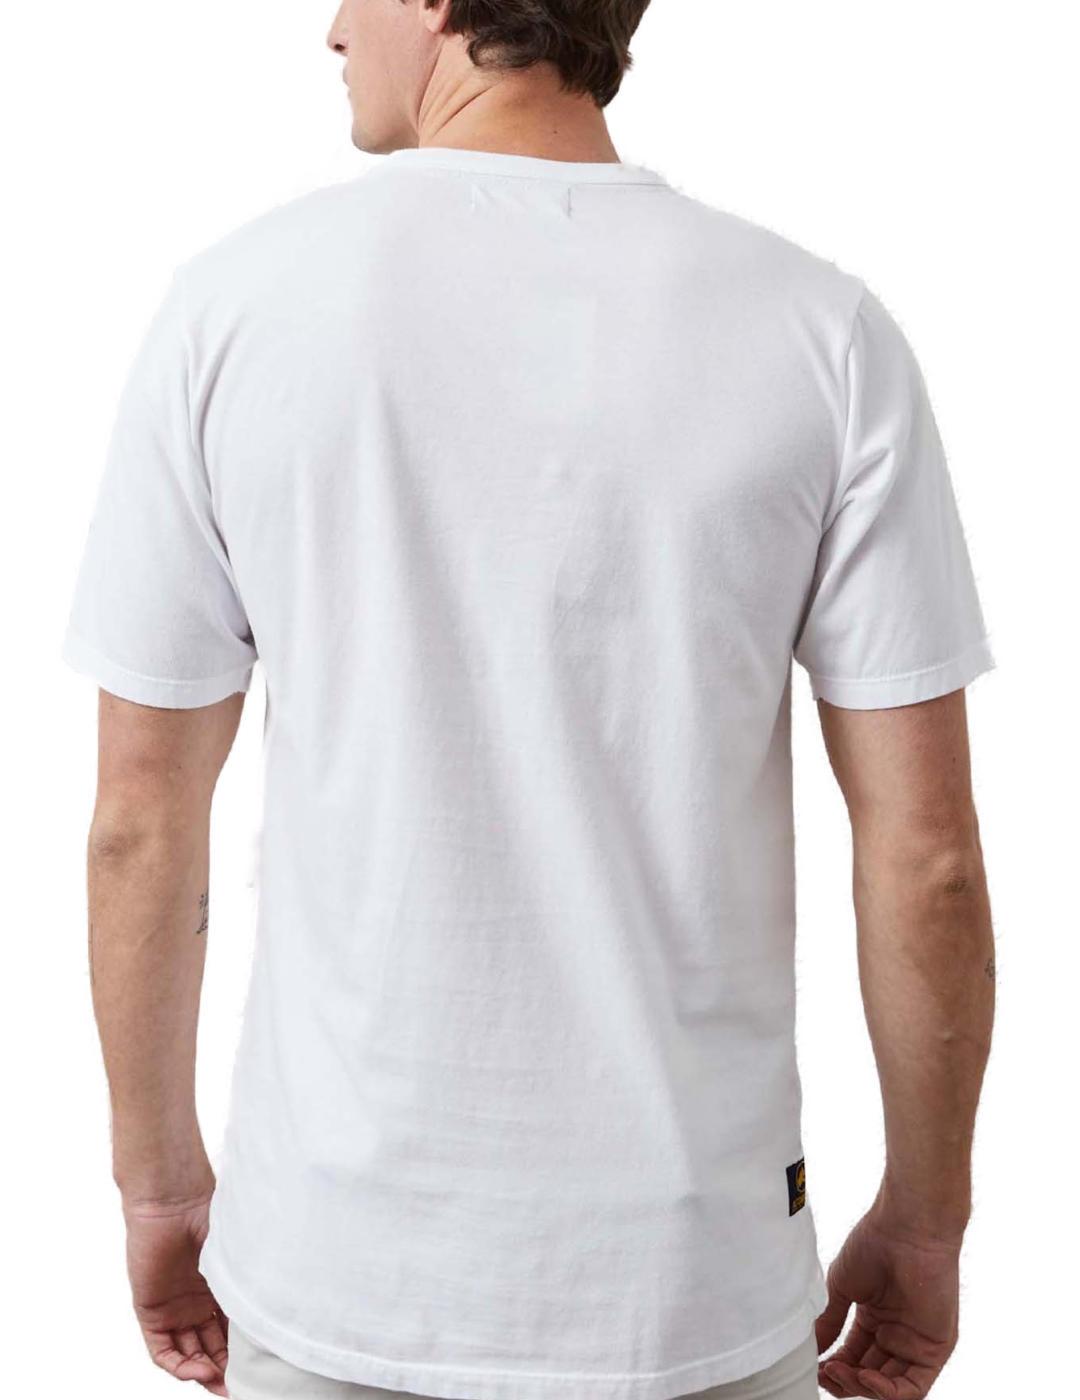 Camiseta Altonadock blanca tigre manga corta para hombre